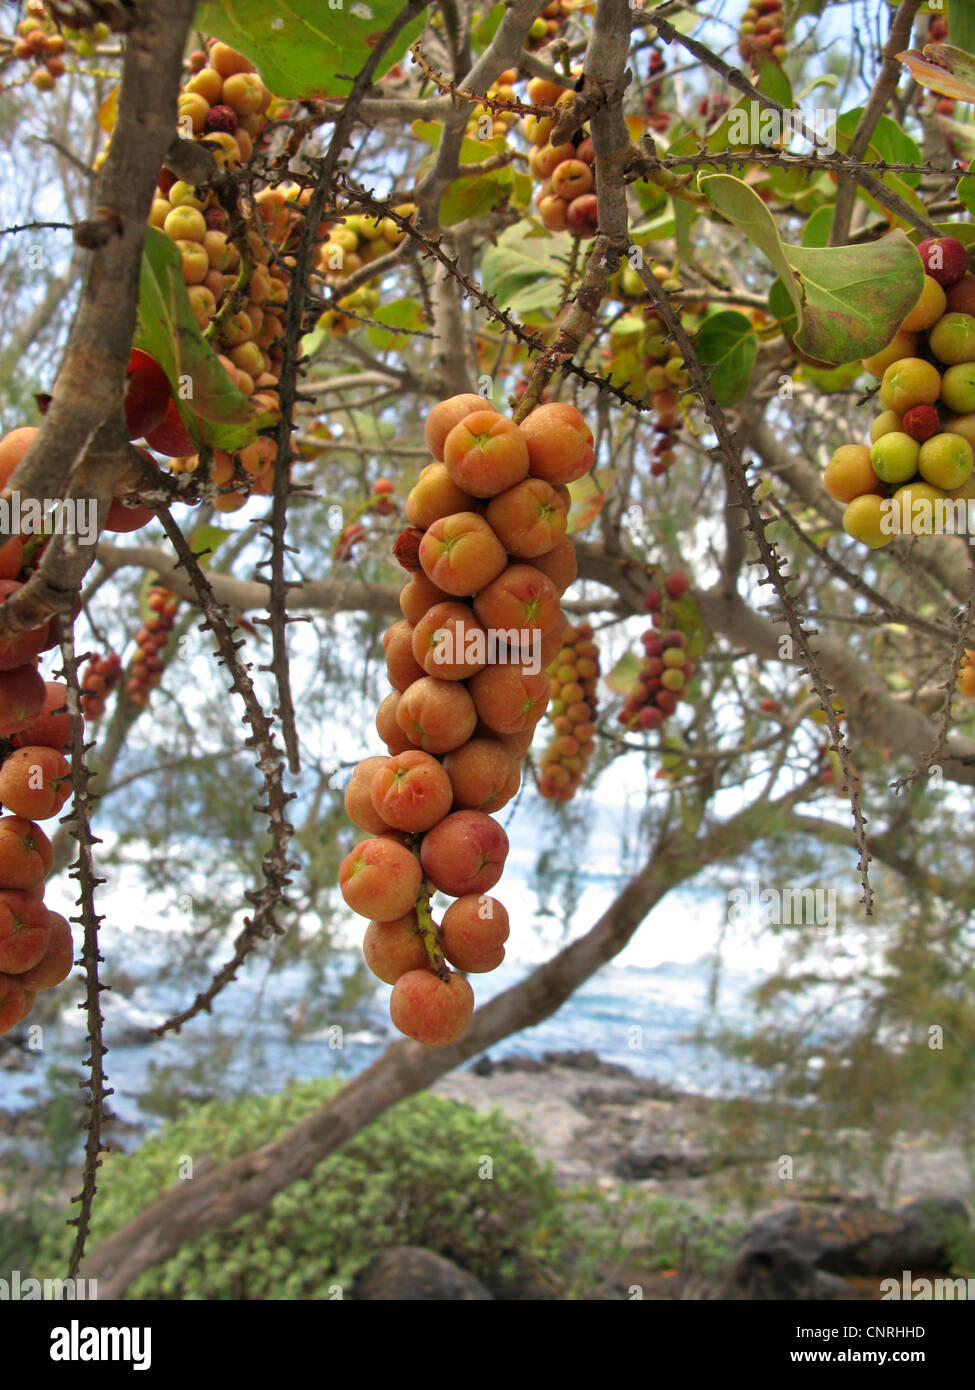 Jamaica kino, sea grape (Coccoloba uvifera), fruits on tree, Canary Islands, Tenerife Stock Photo